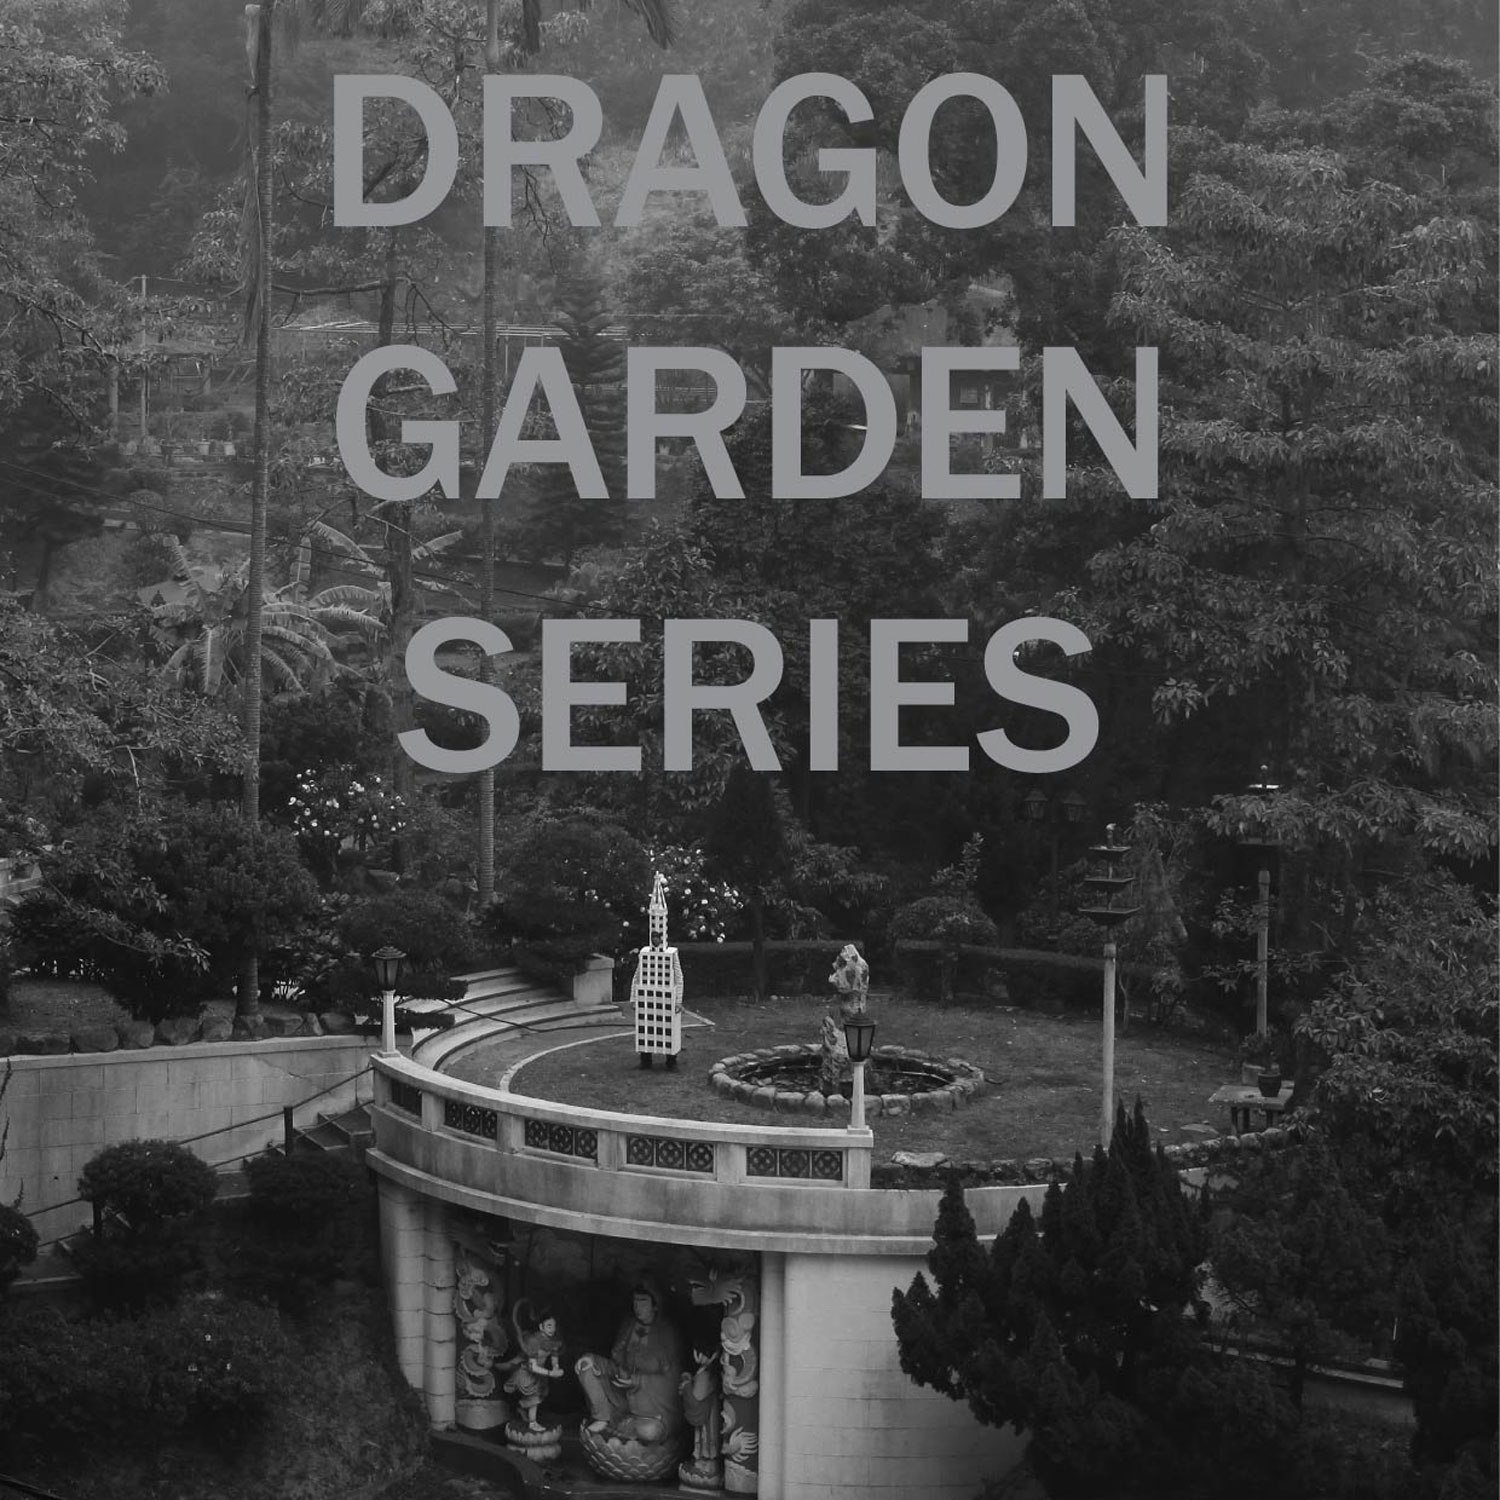   Dragon Garden Photo Series 龍圃花園相片系列  